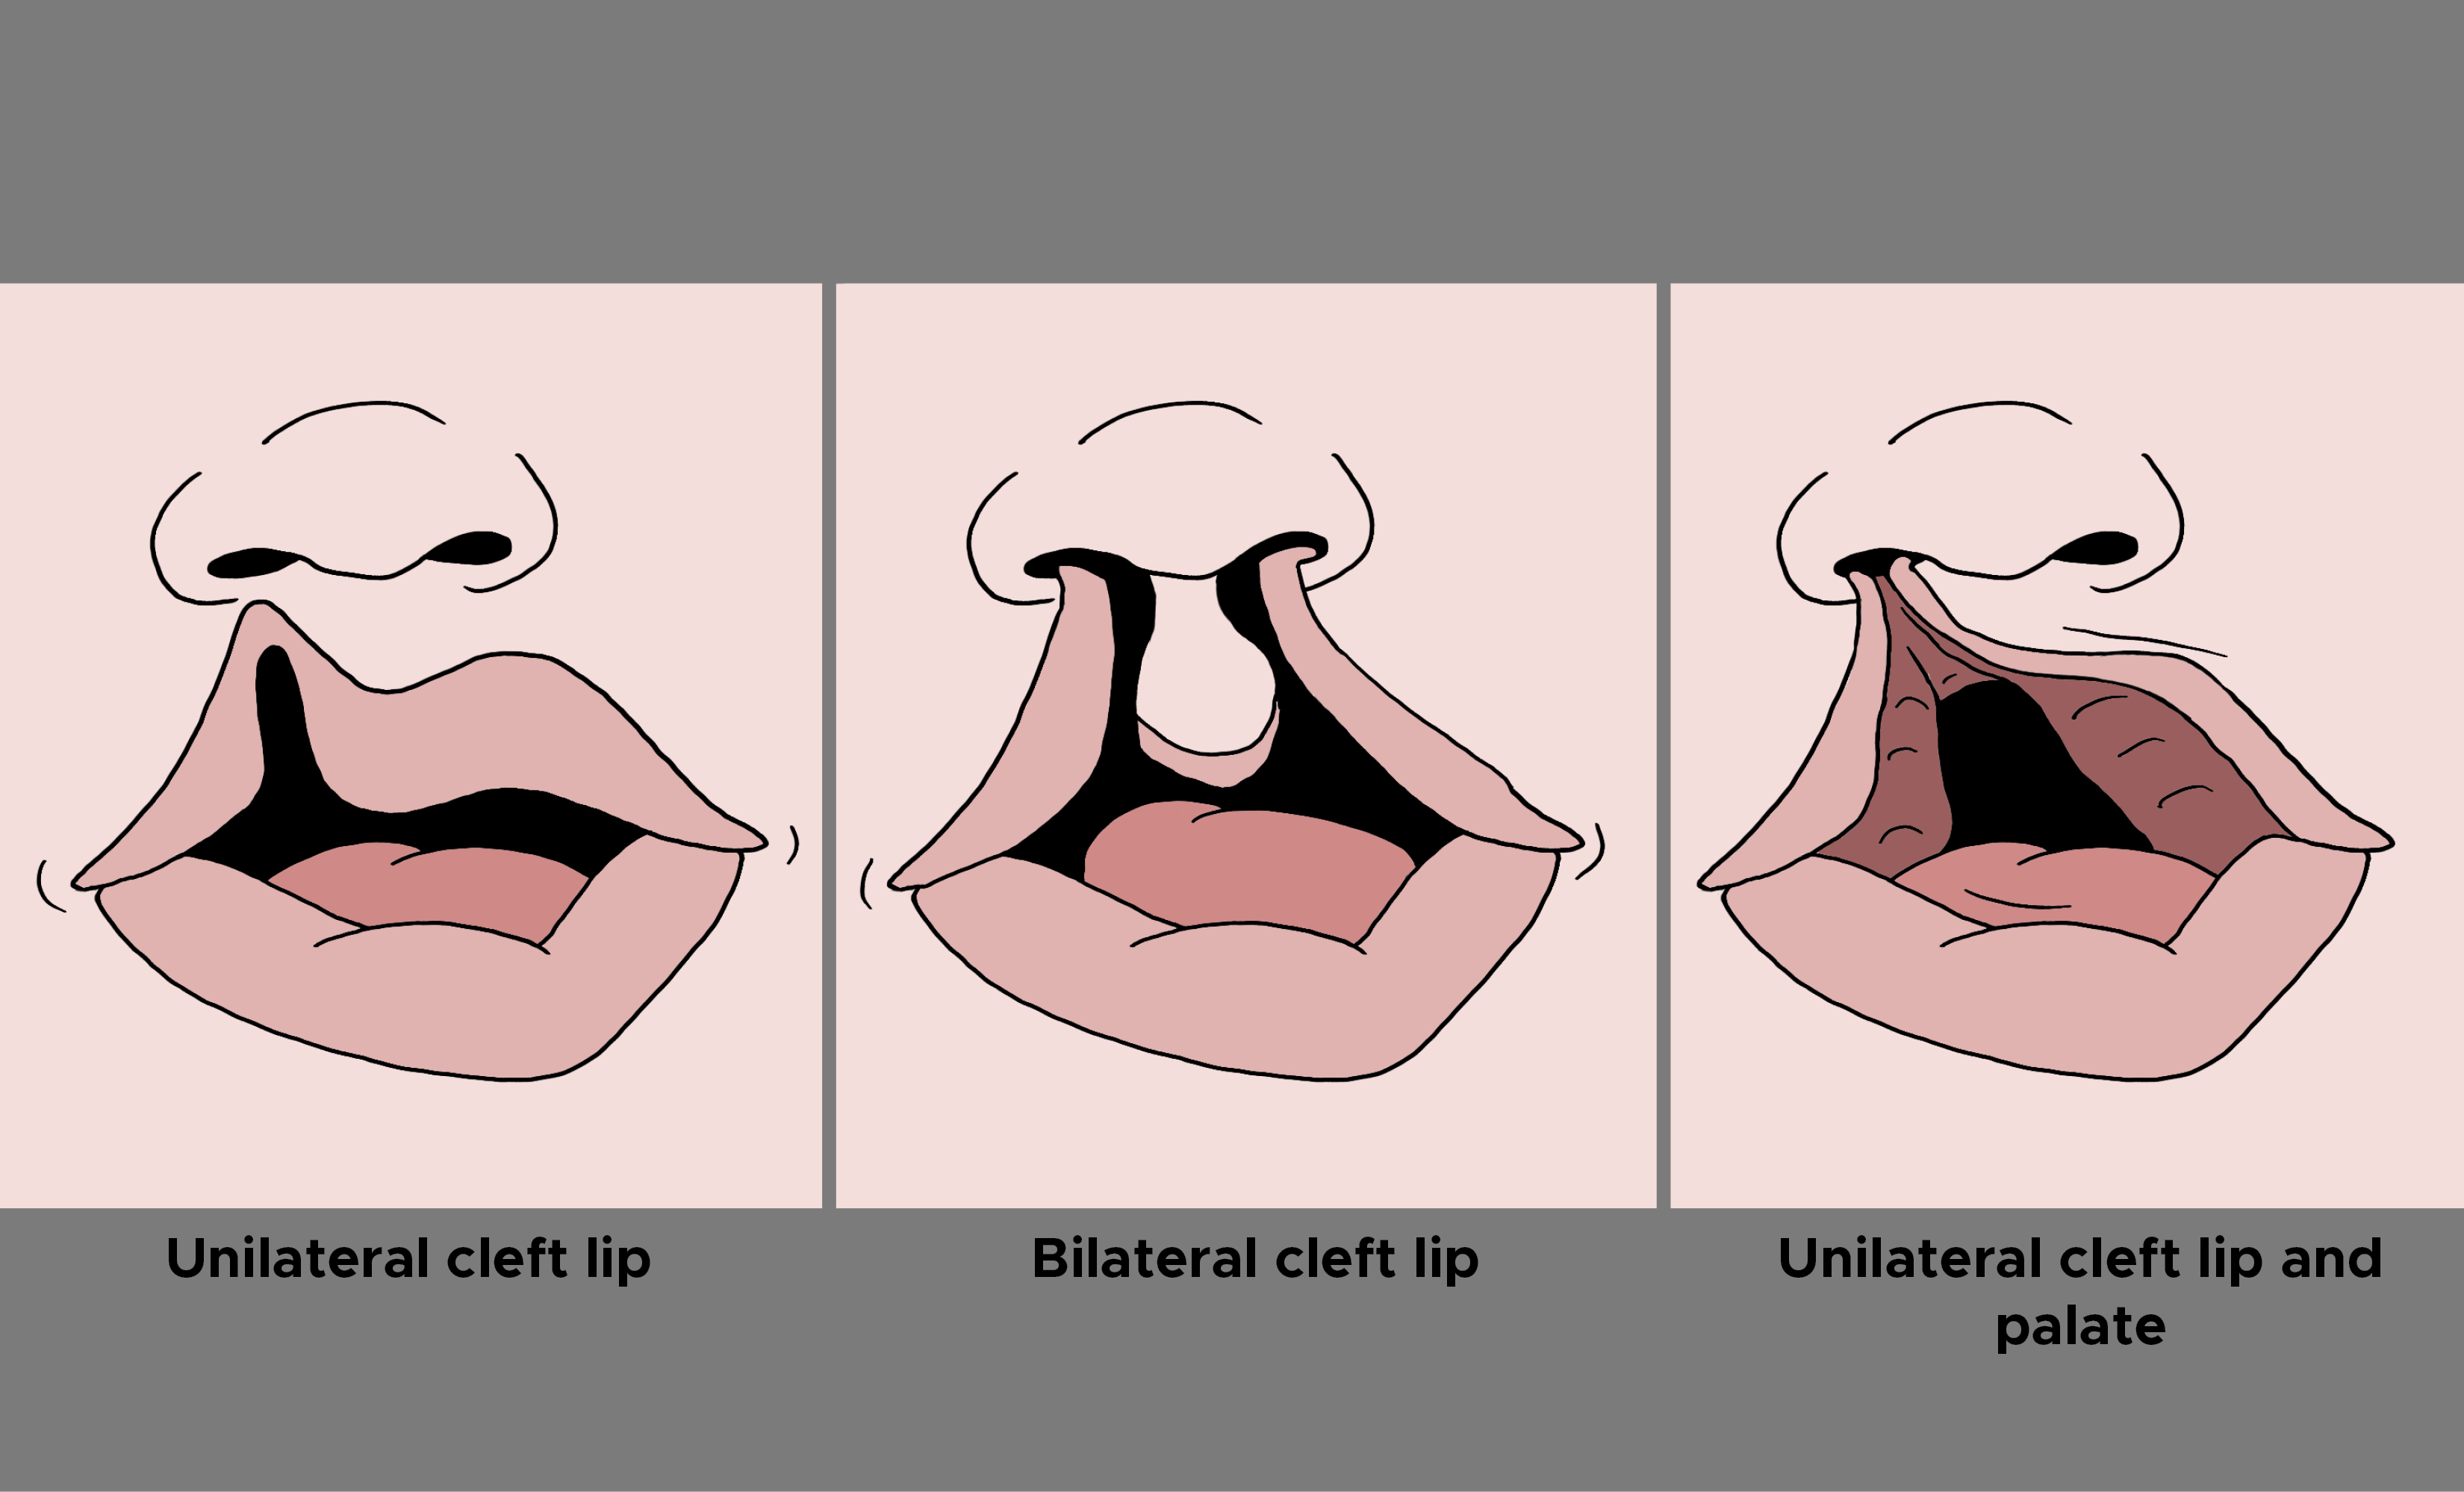 Illustration. Unilateral cleft lip, bilateral cleft lip, unilateral cleft lip and palate